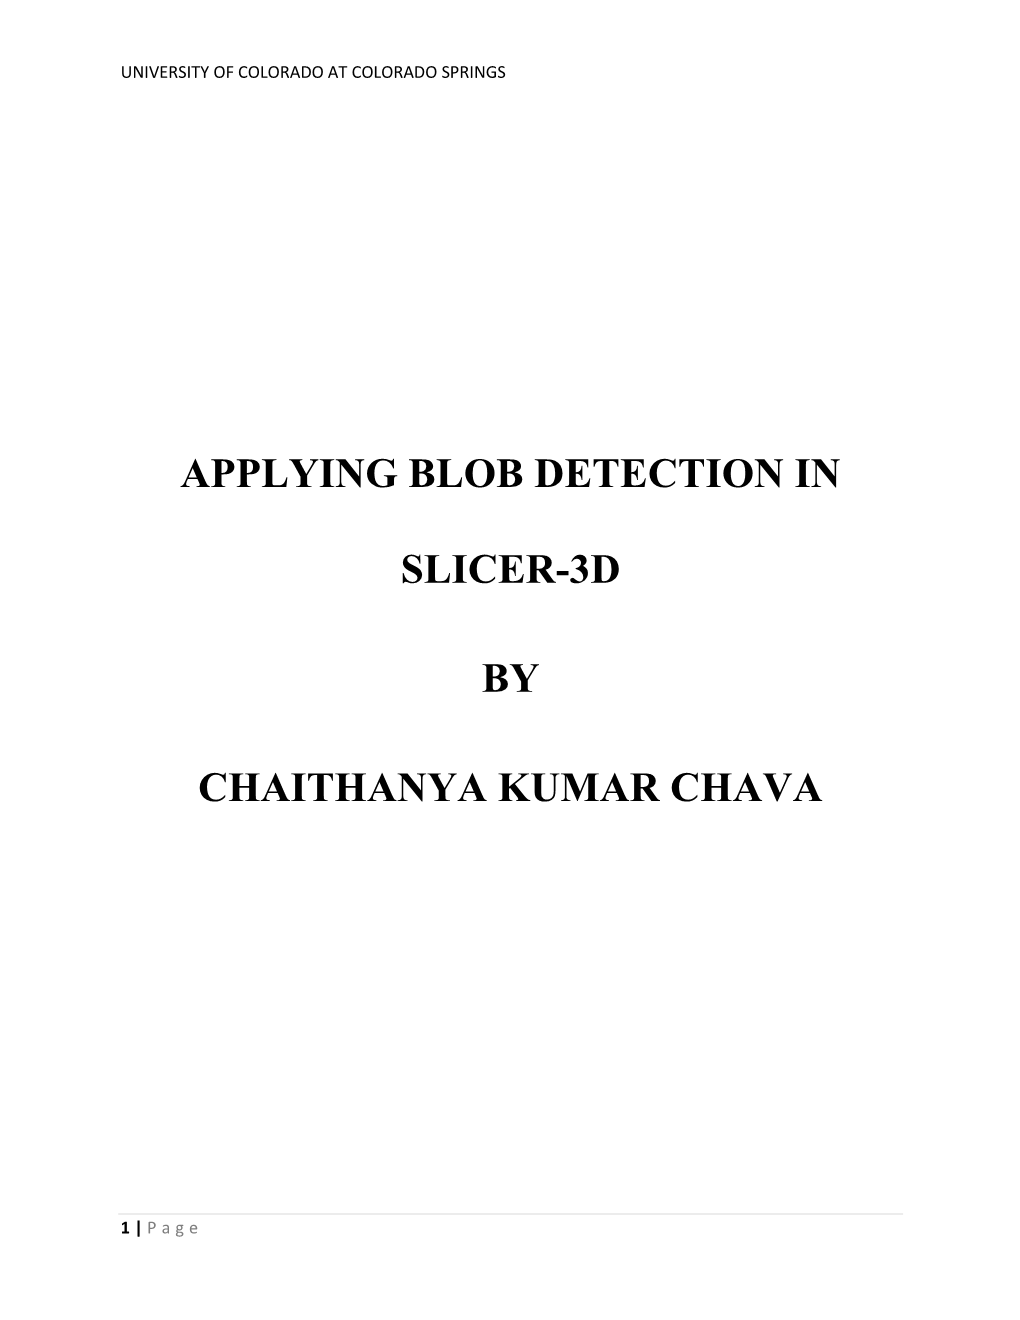 Applying Blob Detection in Slicer-3D by Chaithanya